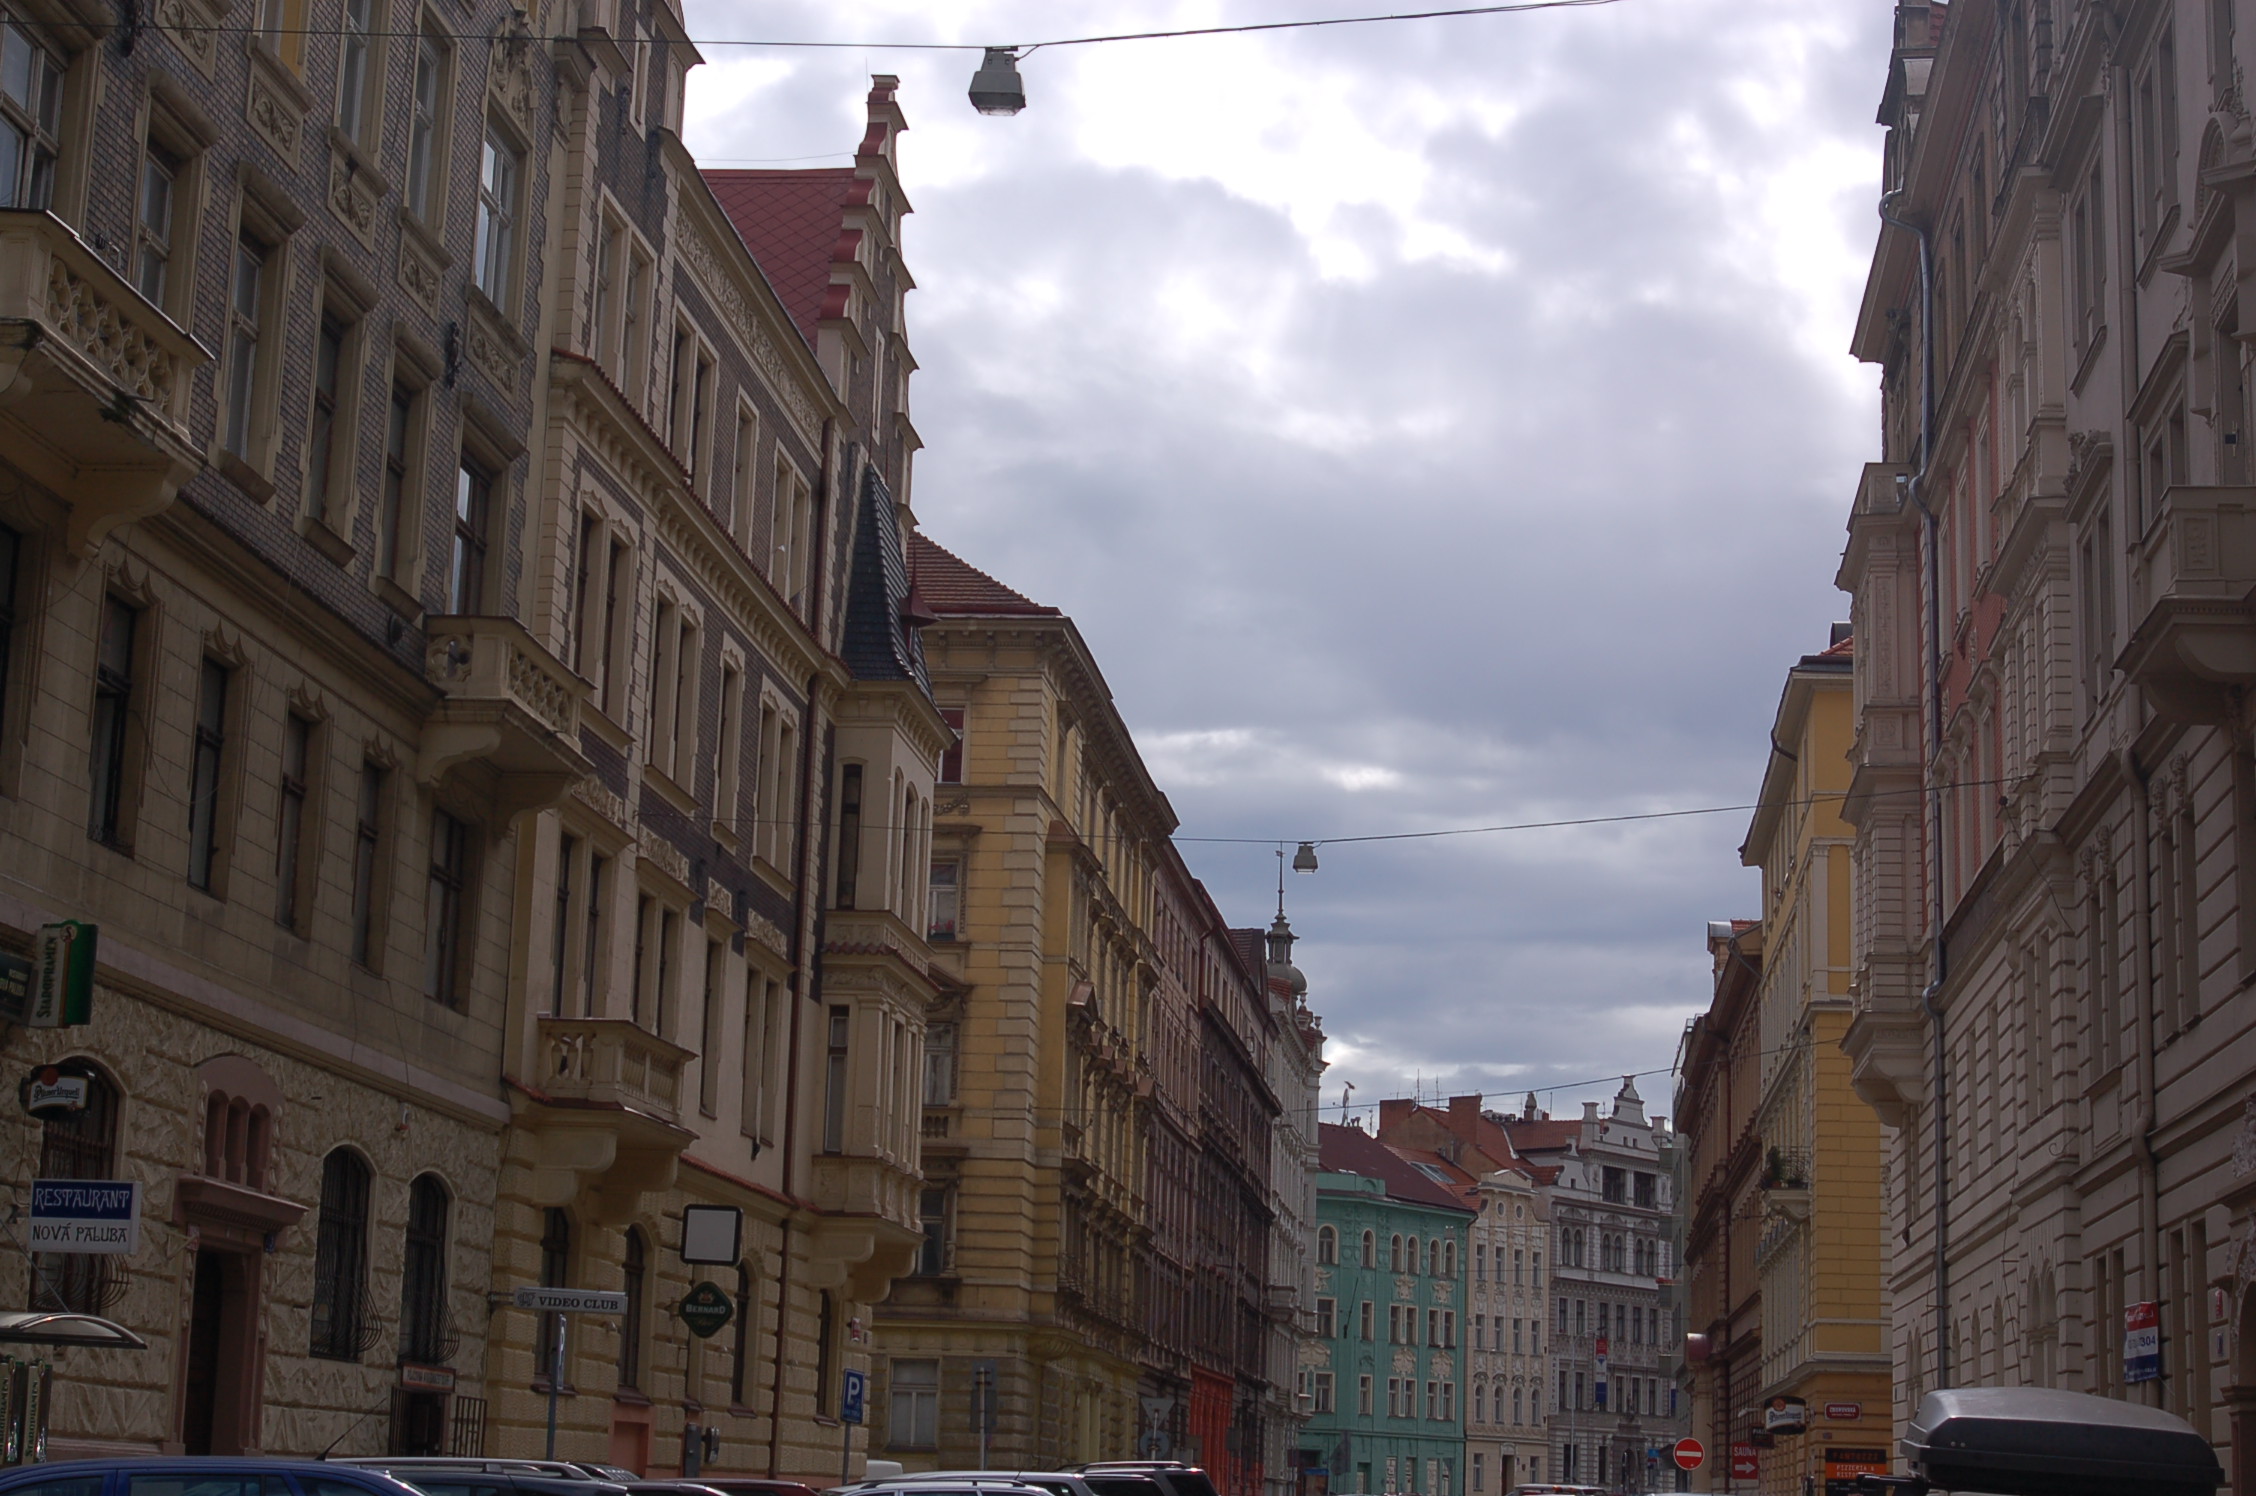 the view down a long, narrow city street